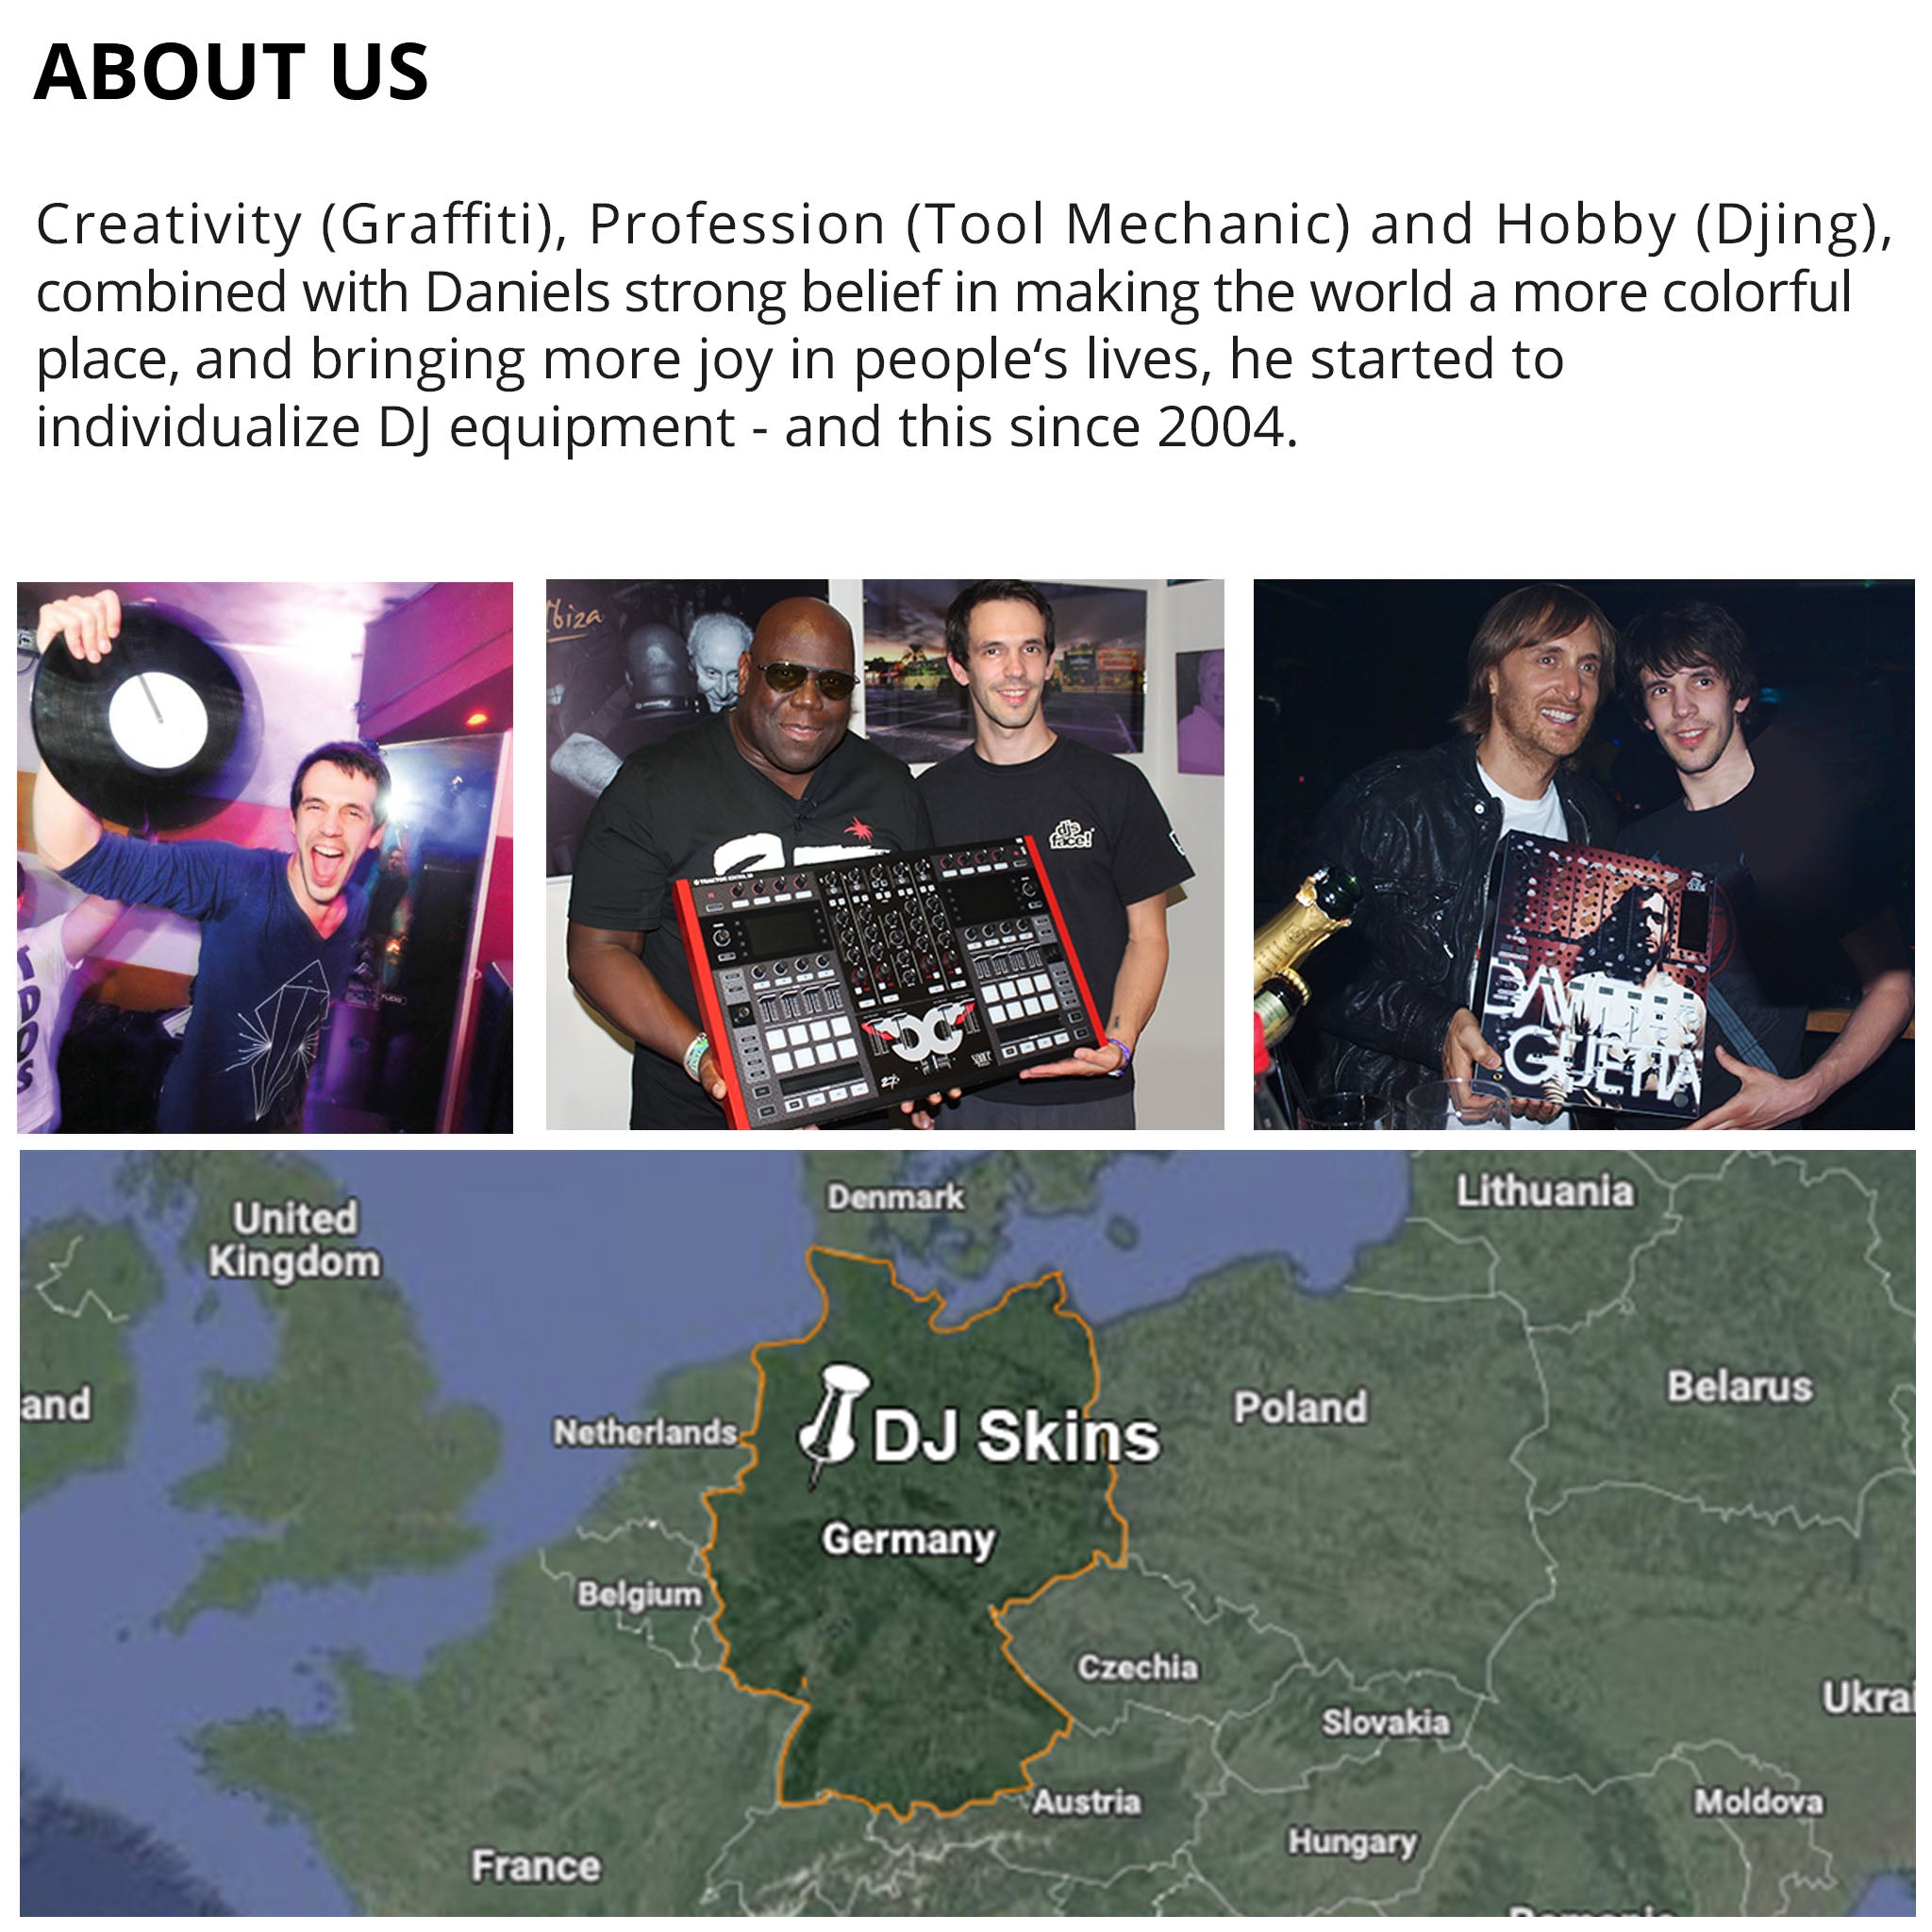 Pioneer DJ DJM 900 NEXUS 2 Skin Henna Classic